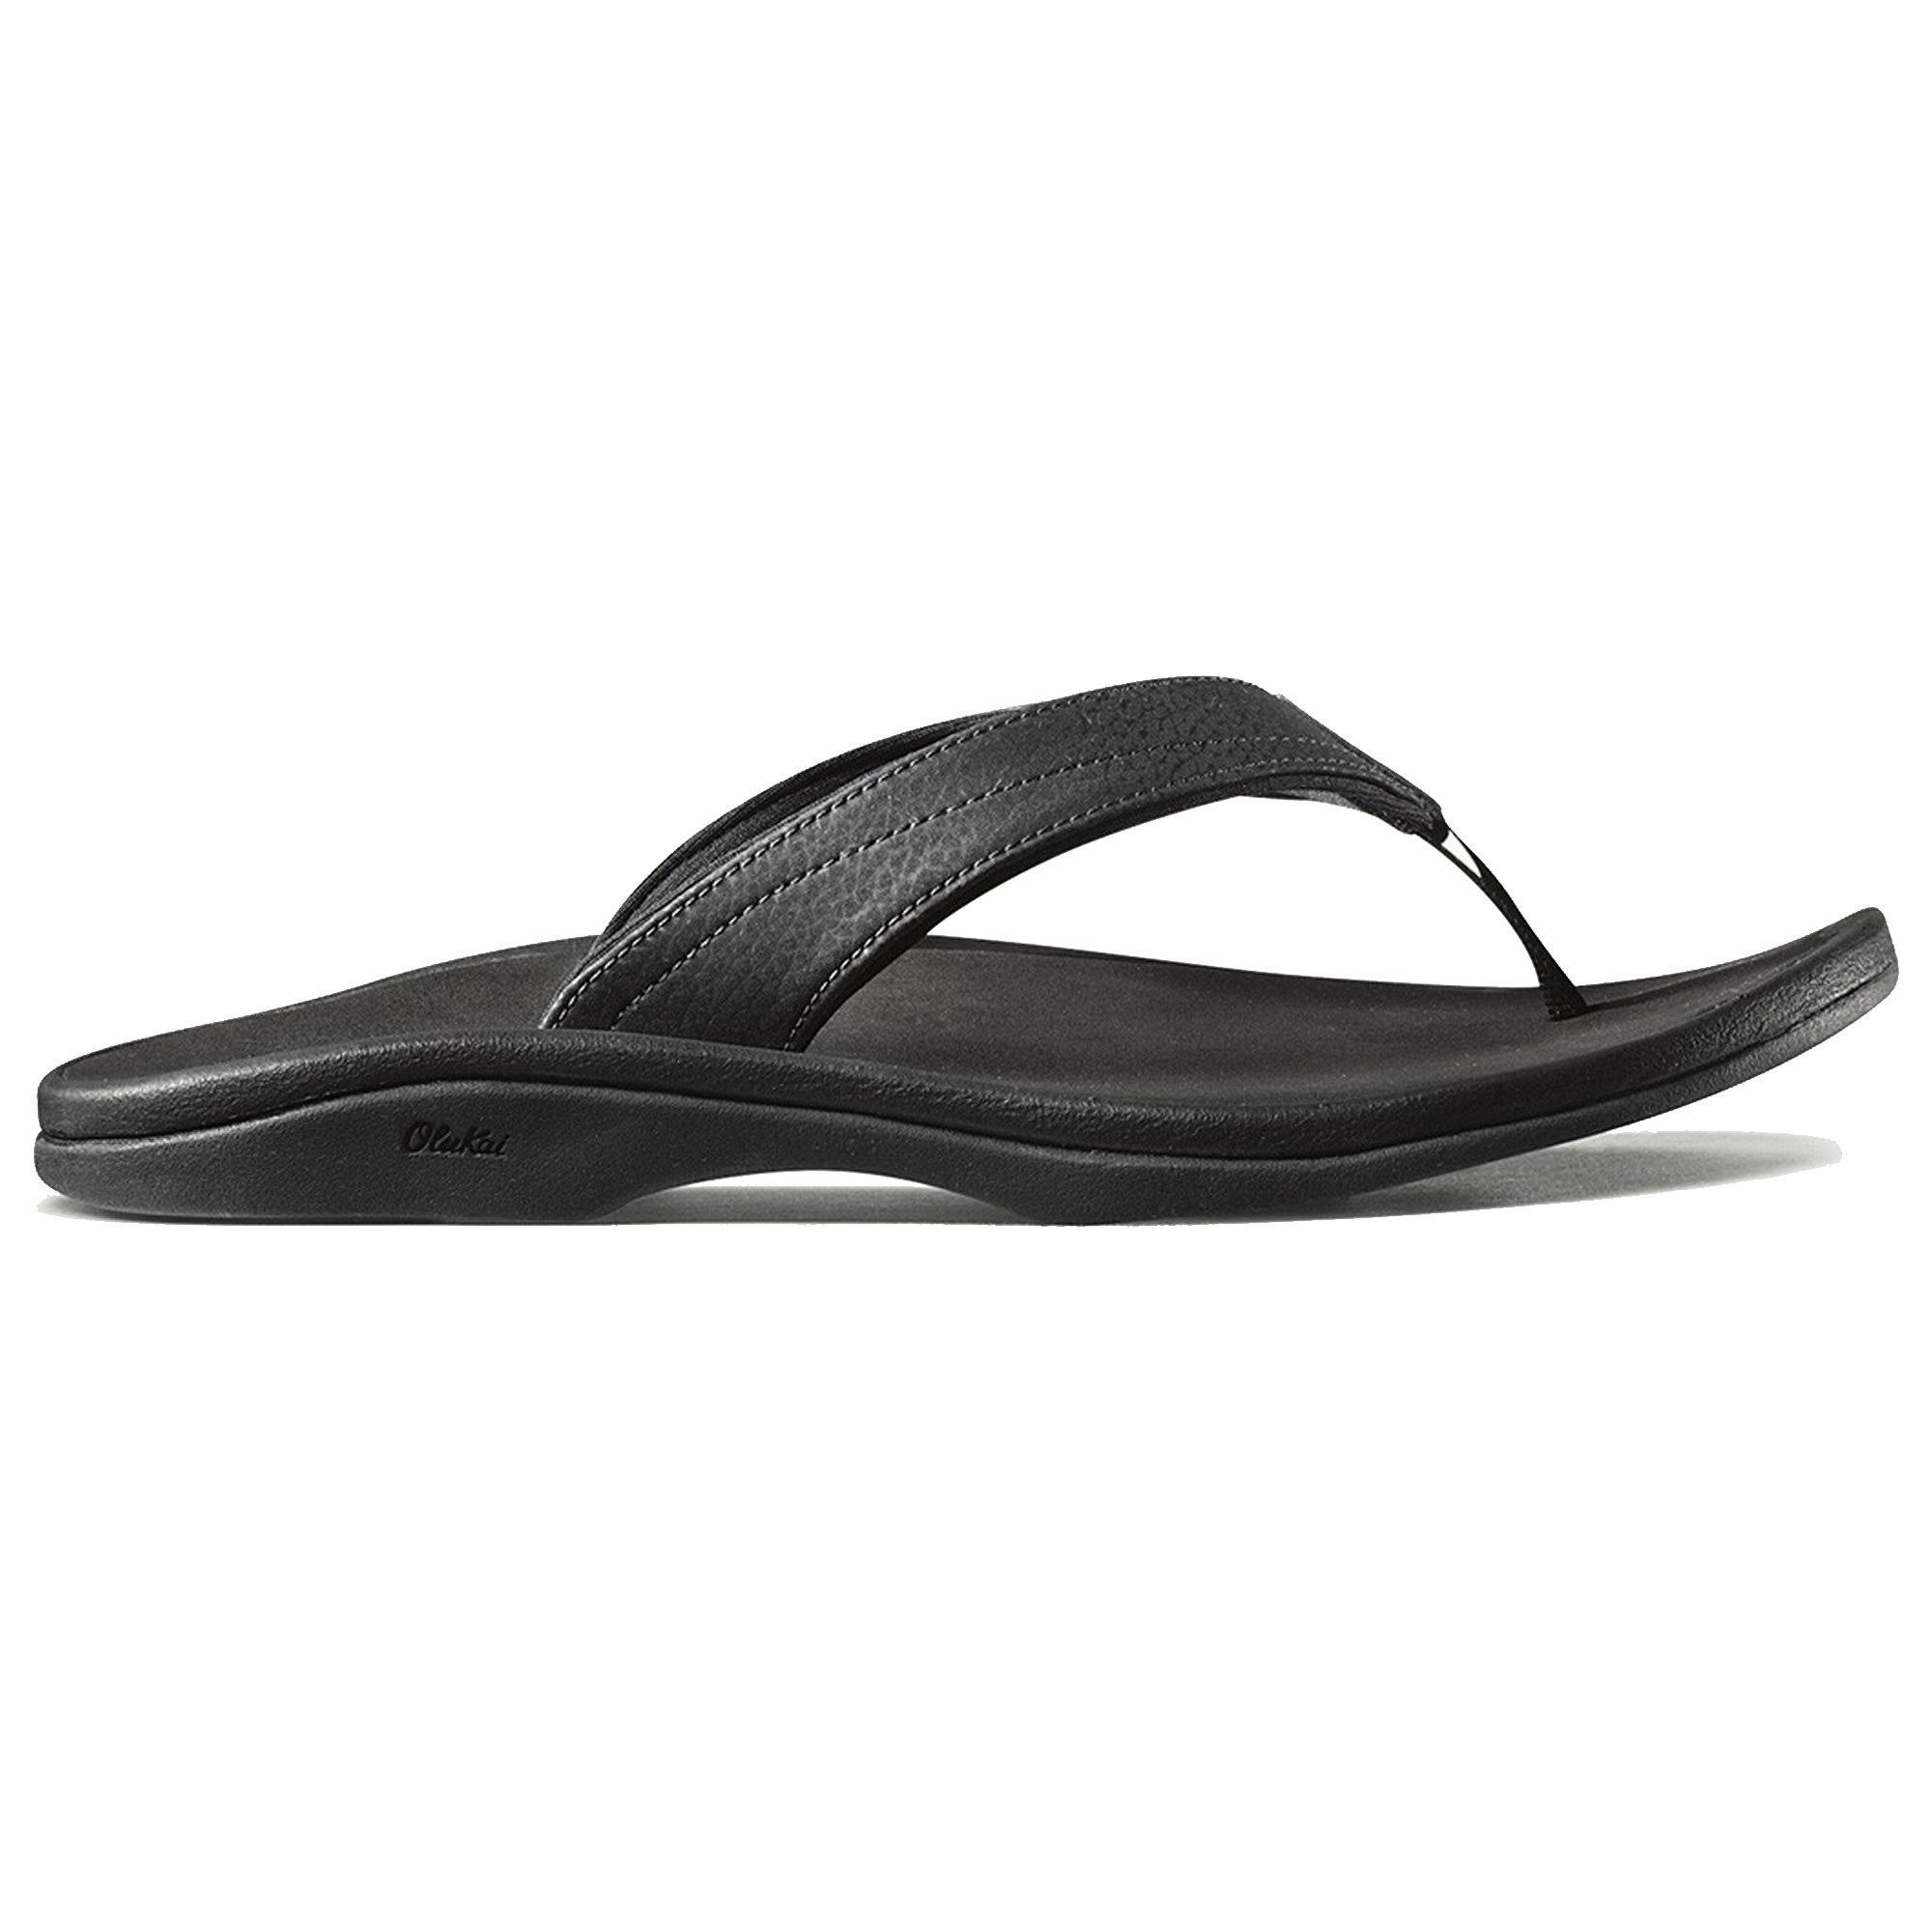 Olukai Women's Ohana Sandals - Black